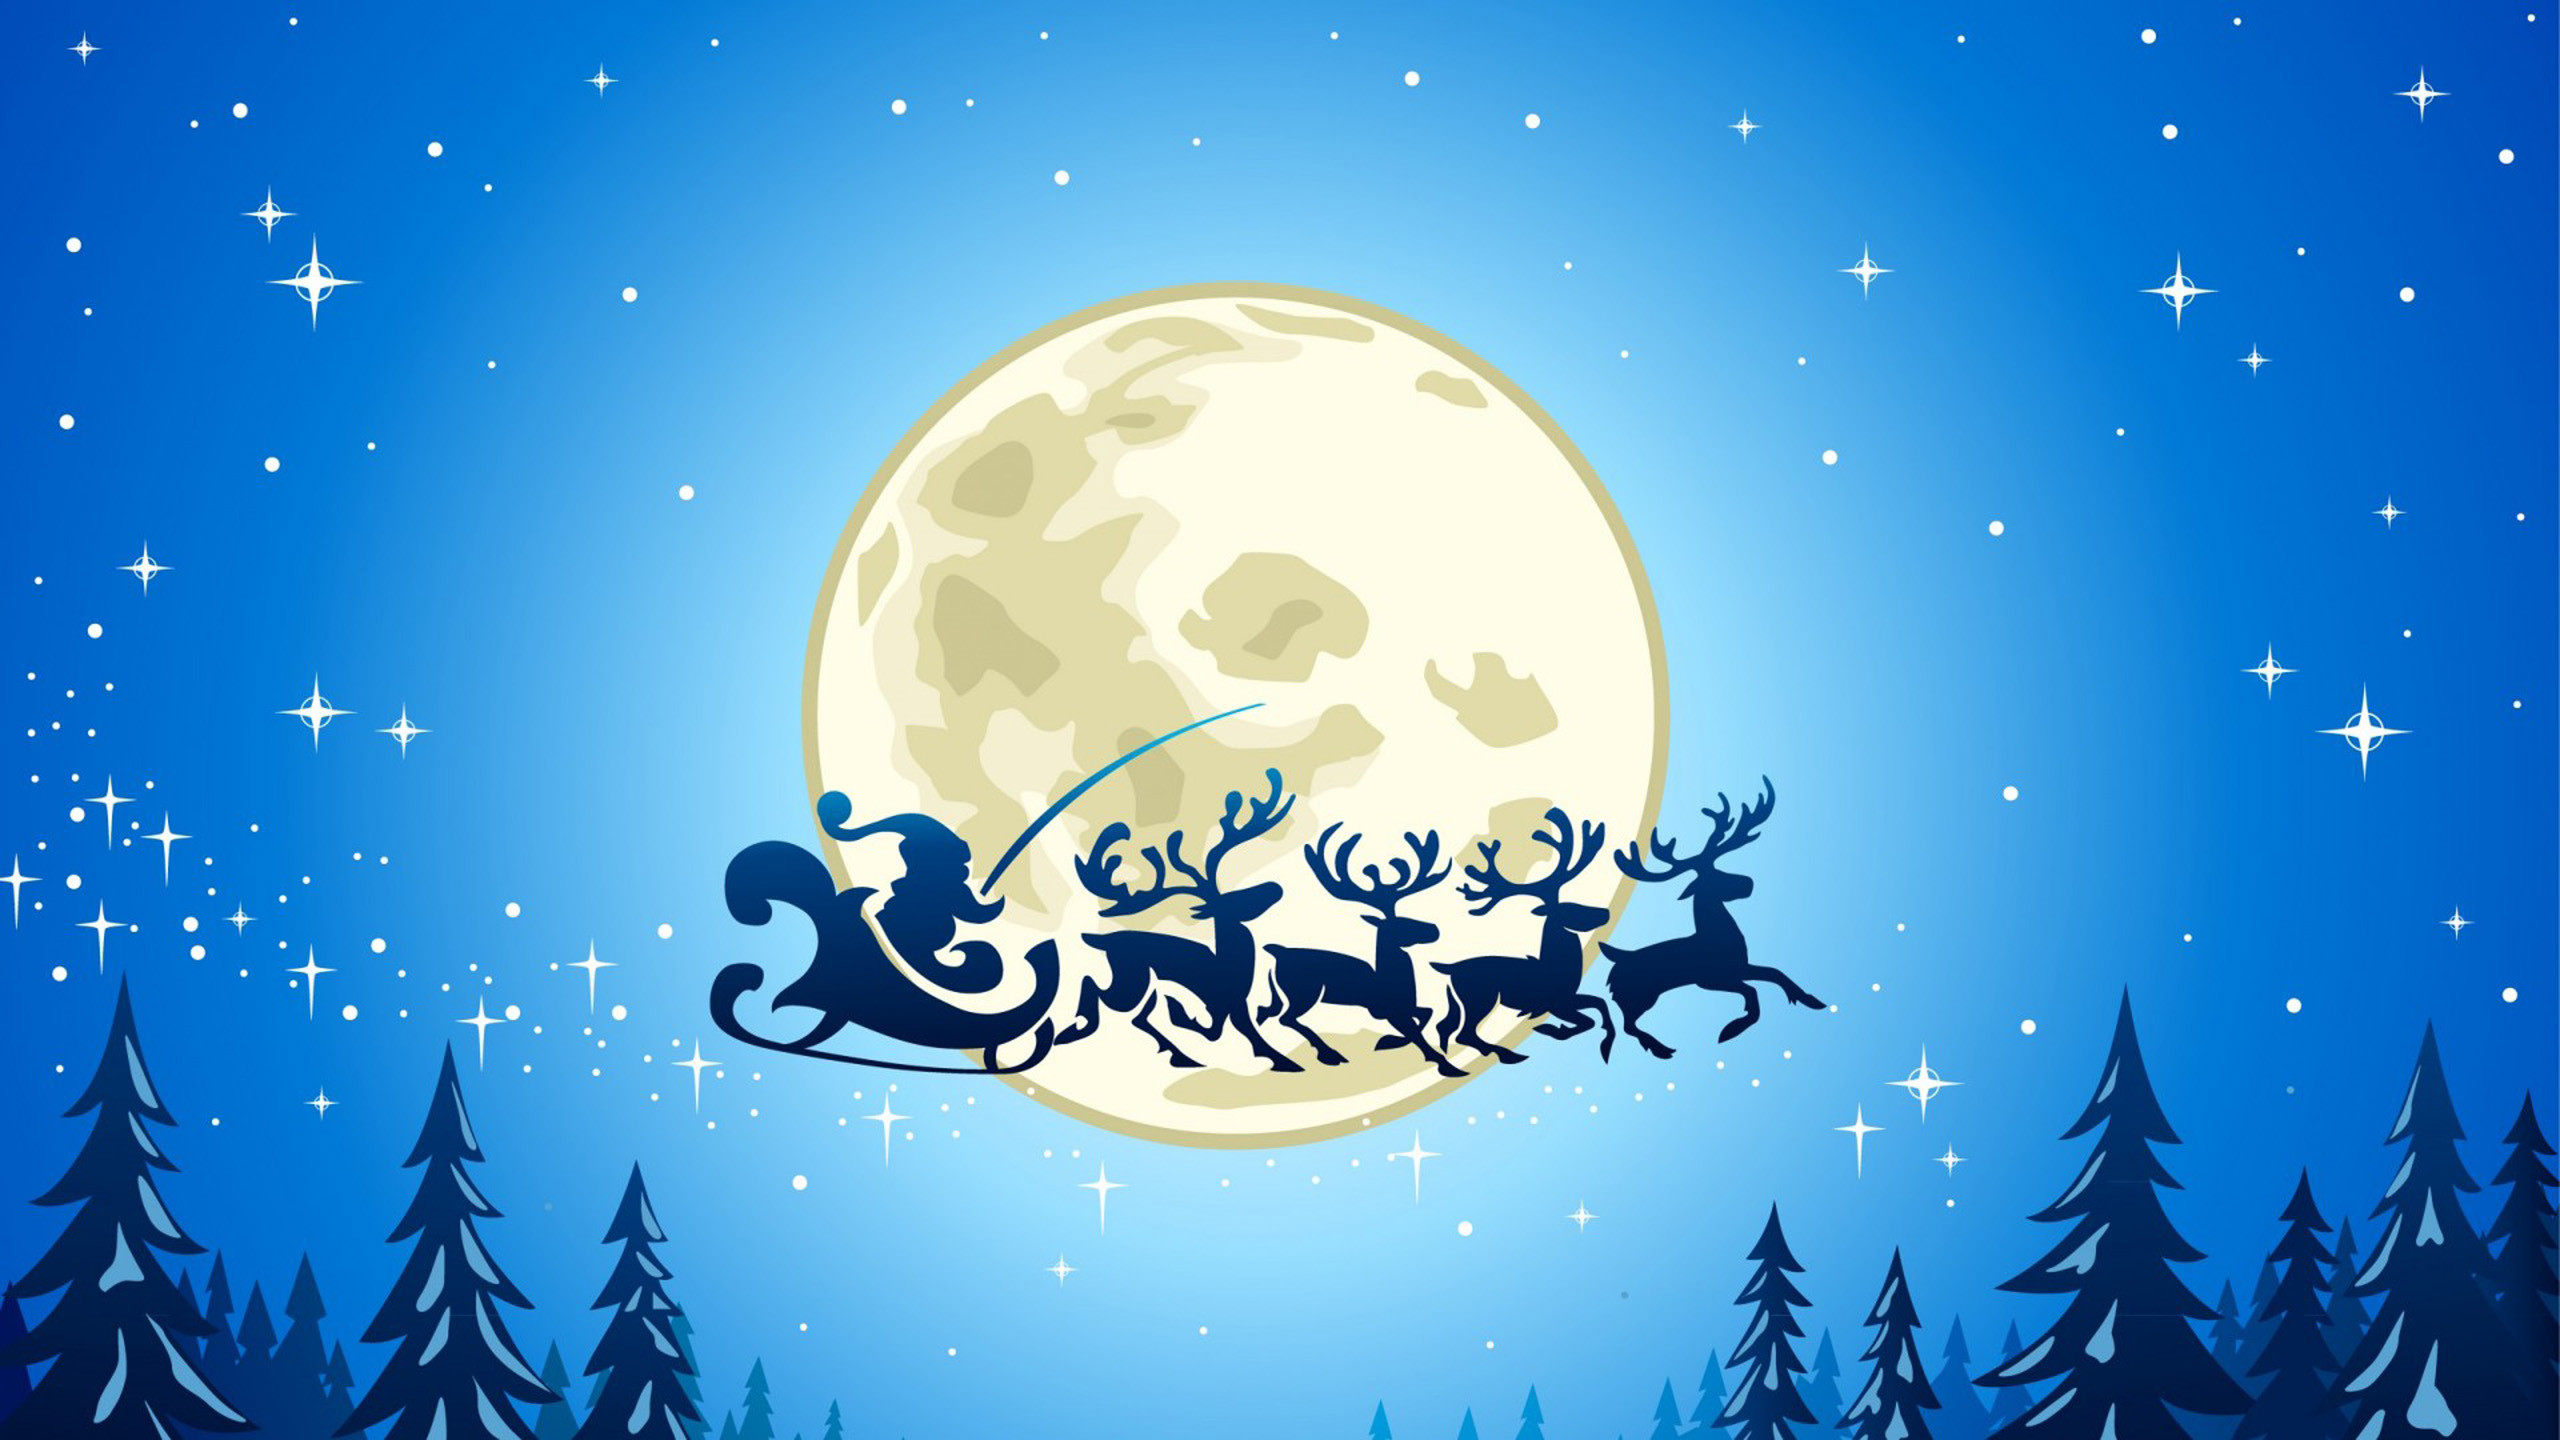 0 Winter Holidays Hd Desktop Wallpaper Free Christmas - Desktop Background Christmas Themes Hd (2560x1440)